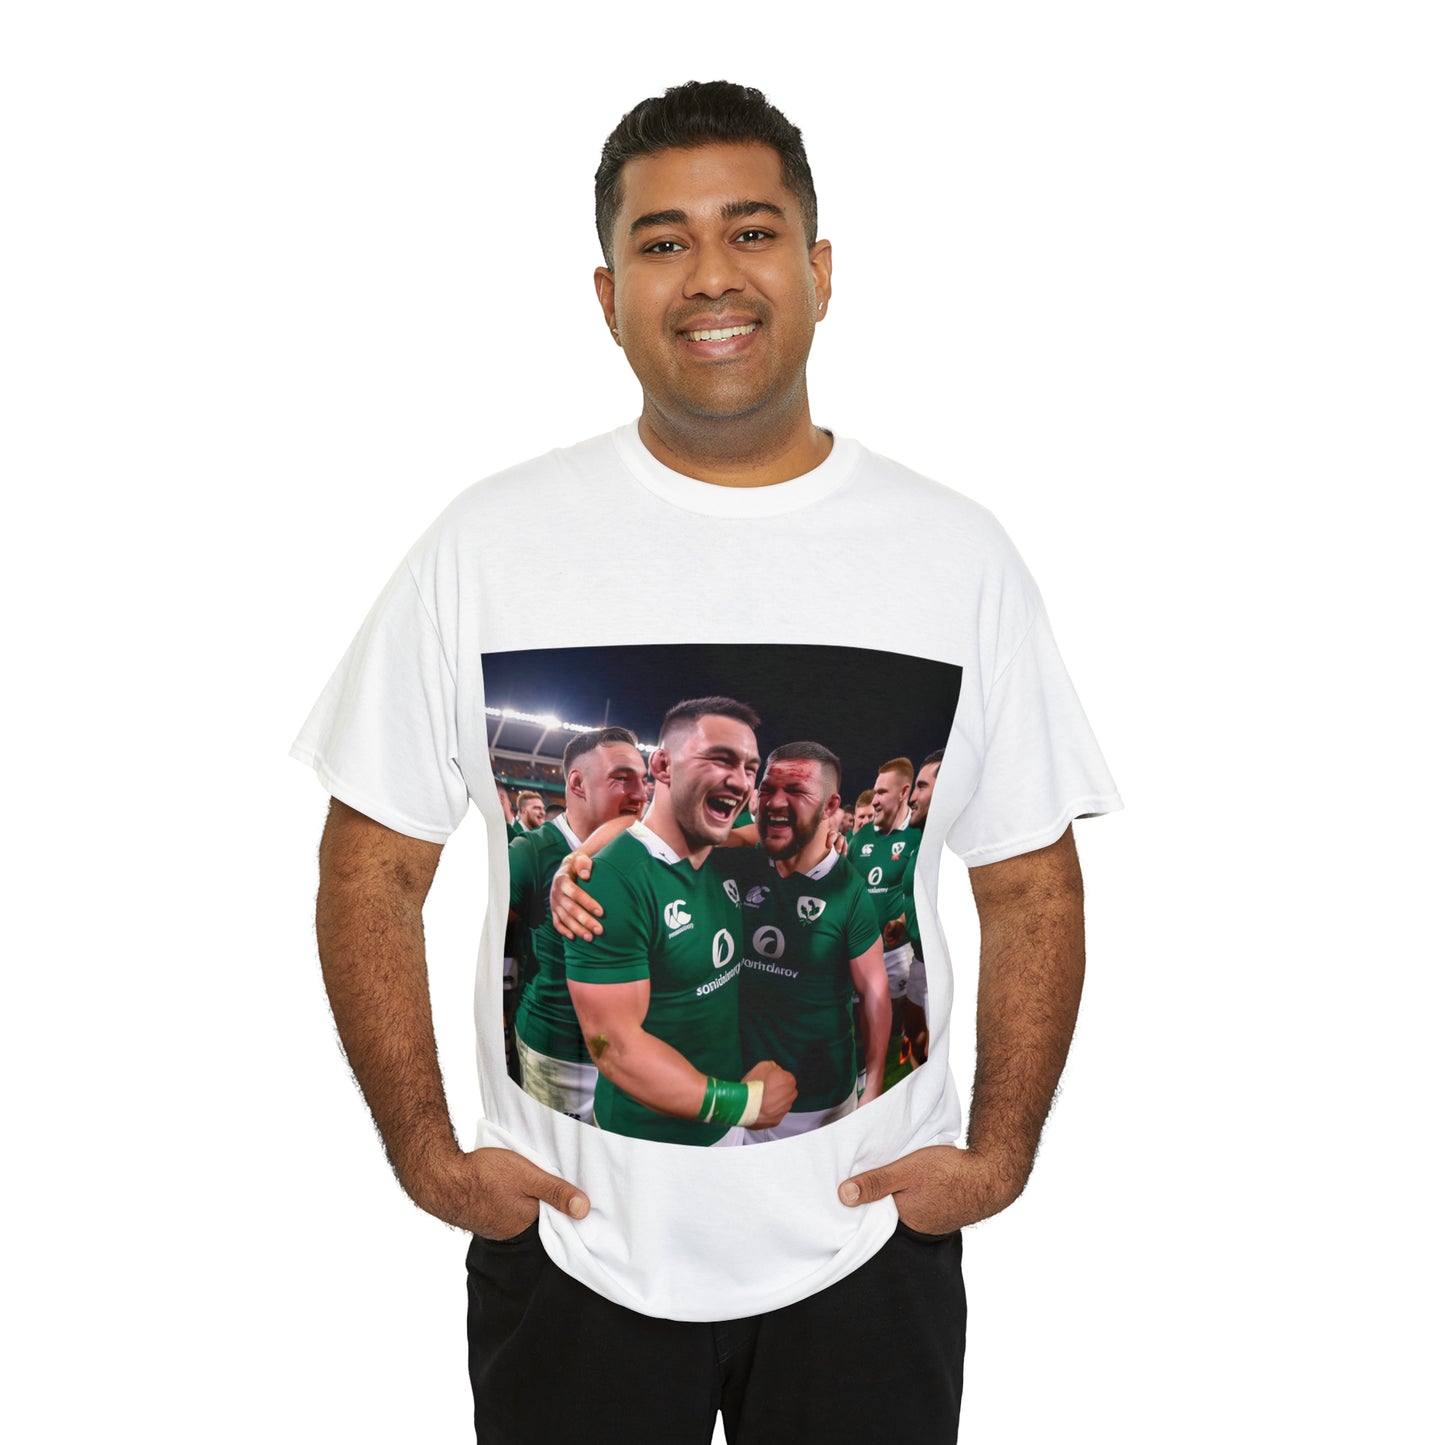 Post Match Ireland - light shirts